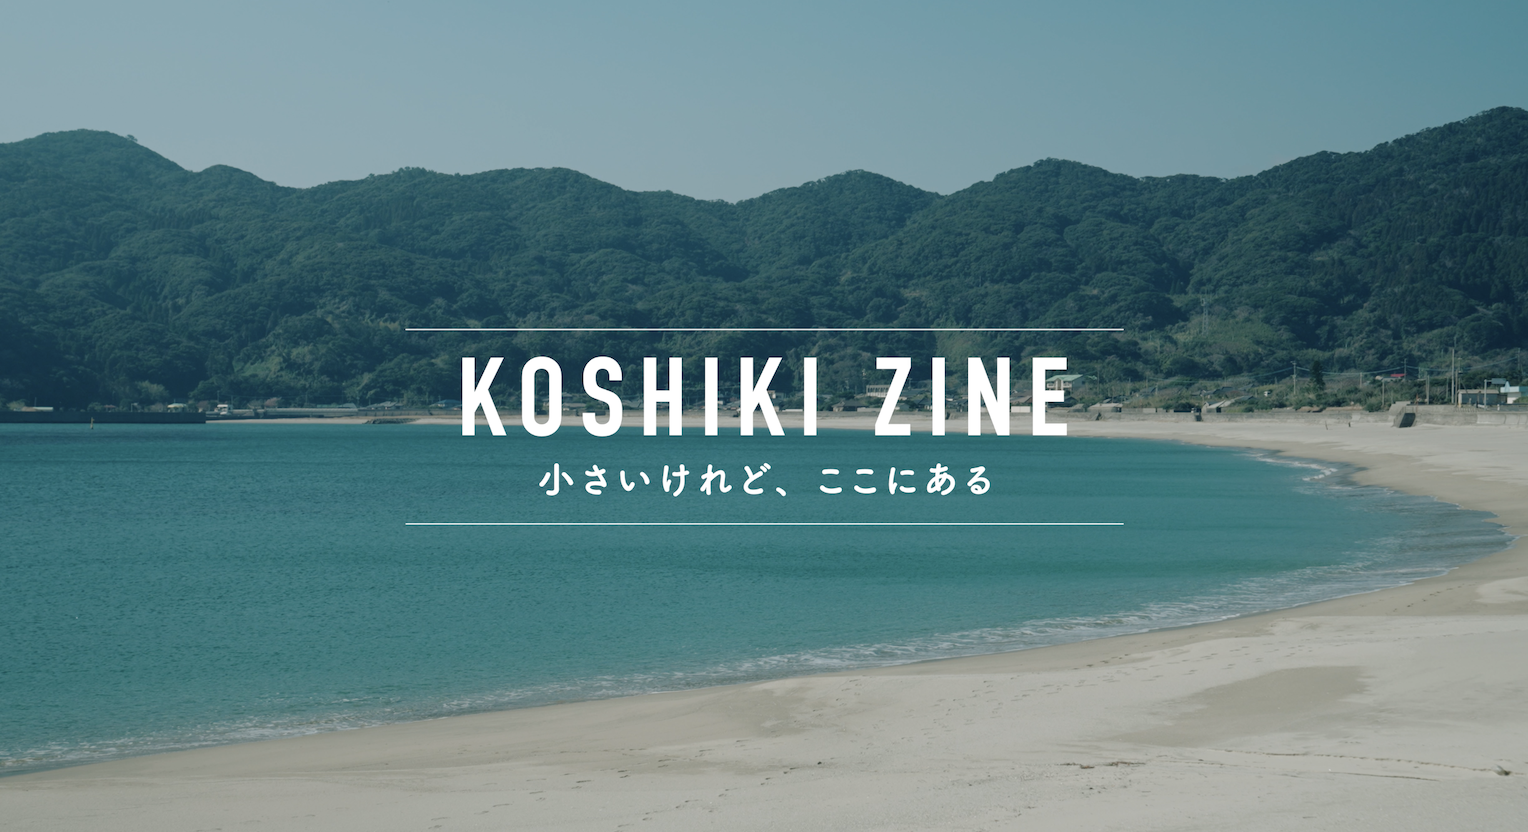 KOSHIKI ZINE イメージ動画制作しました